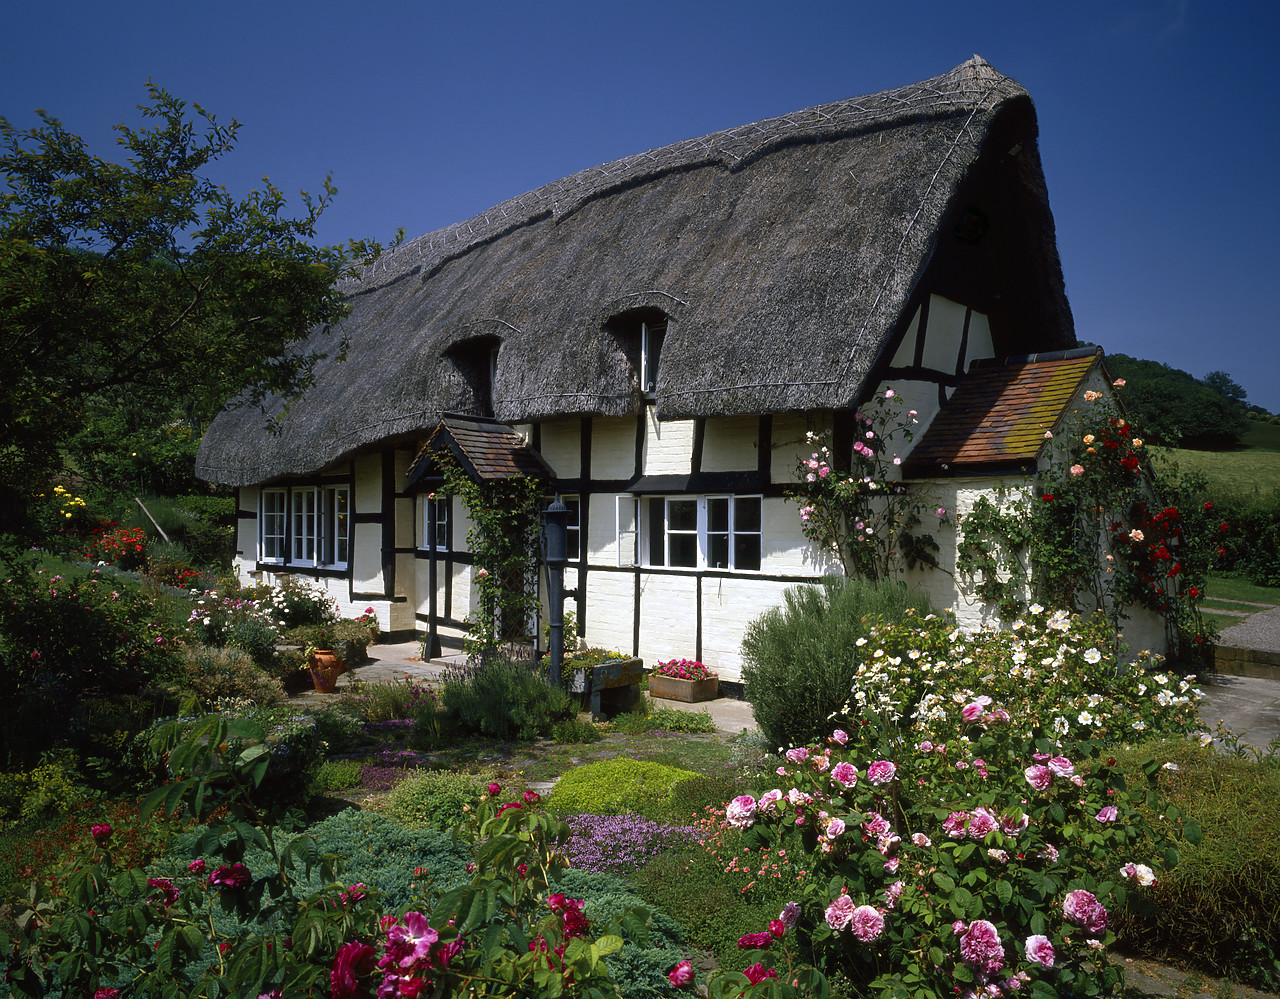 #924021-1 - Thatched Cottage & Garden, Eastnor, Herefordshire, England